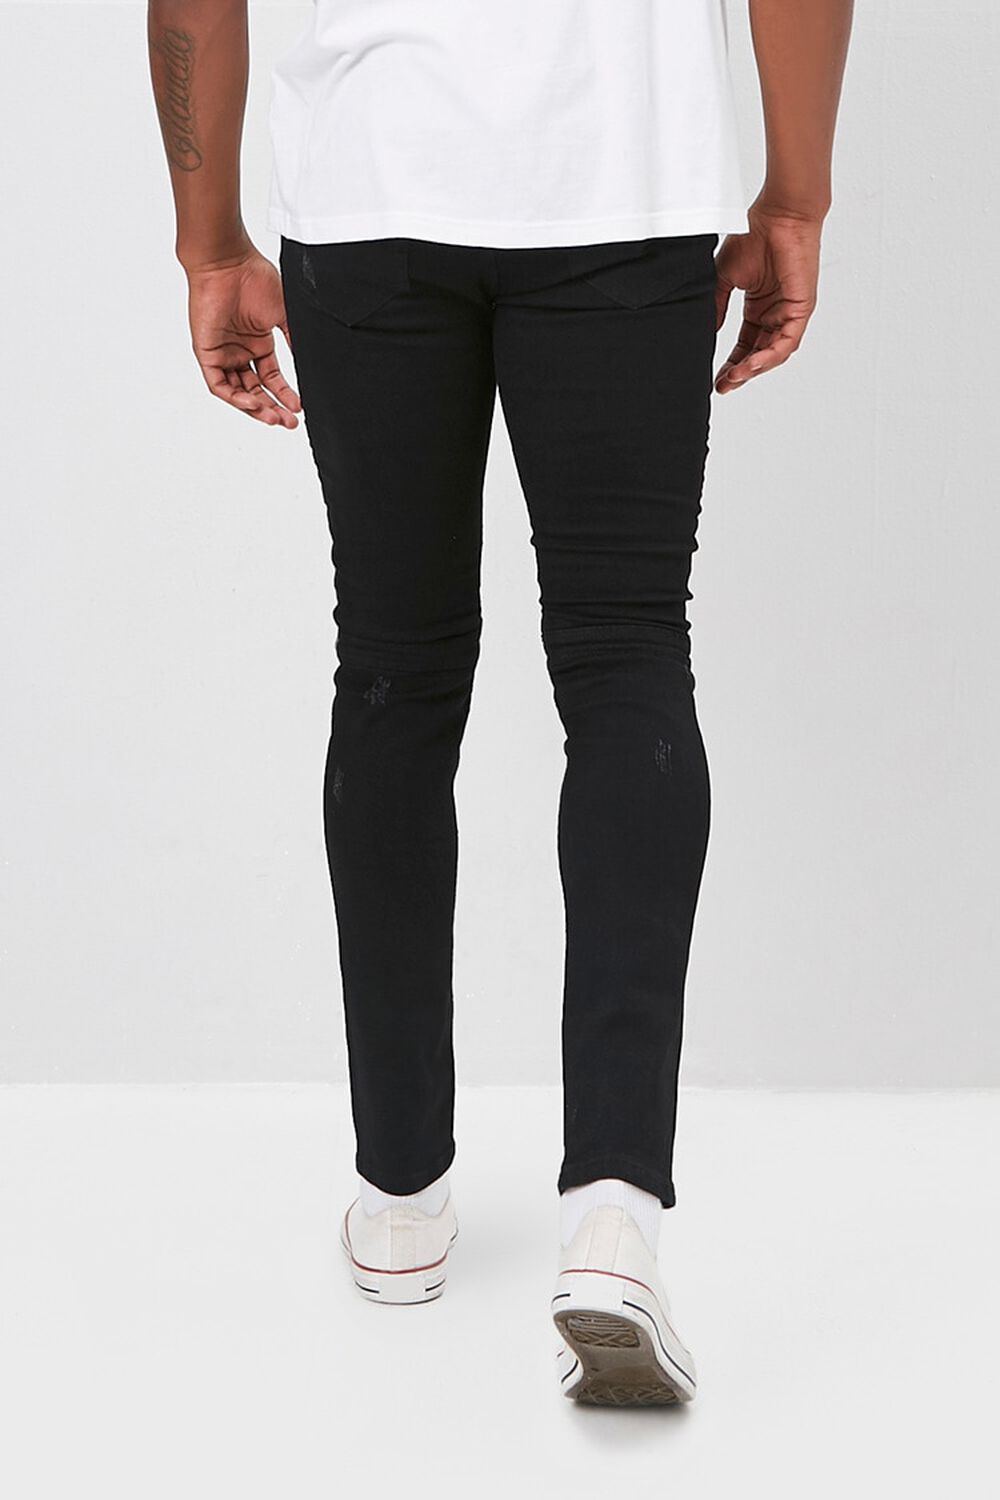 BLACK Zippered Moto Skinny Jeans, image 3